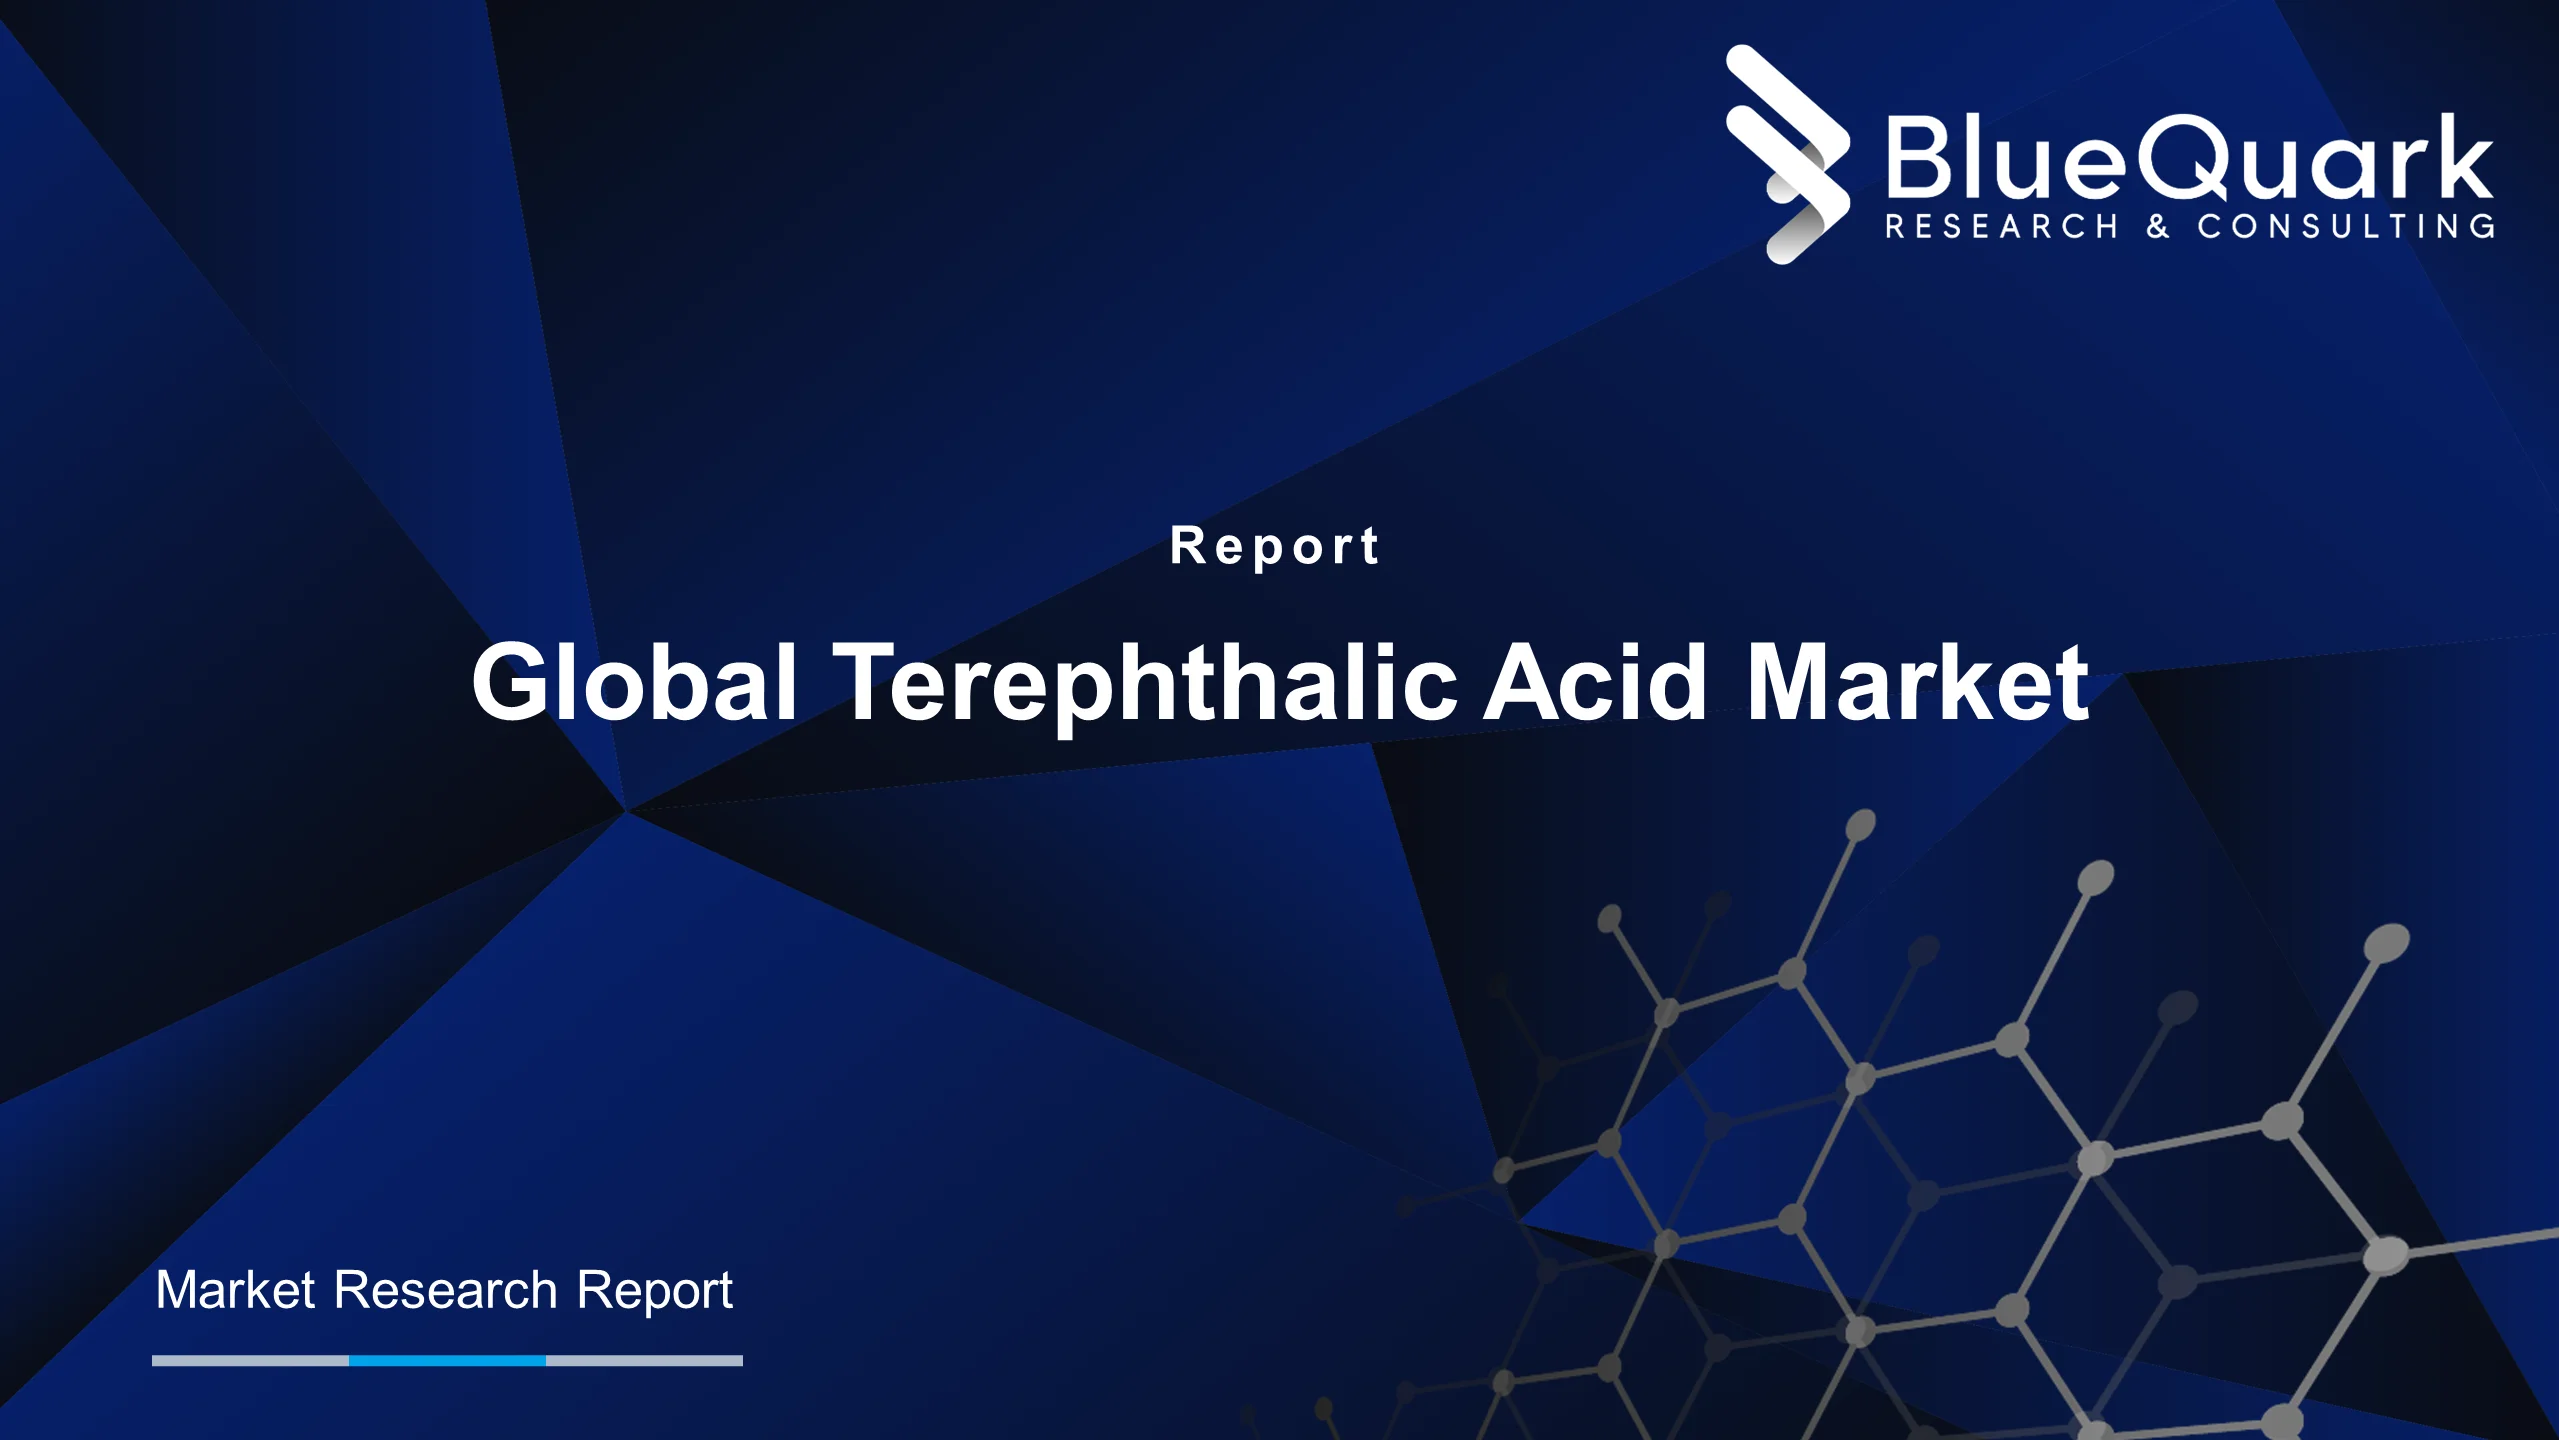 Global Terephthalic Acid Market Outlook to 2029